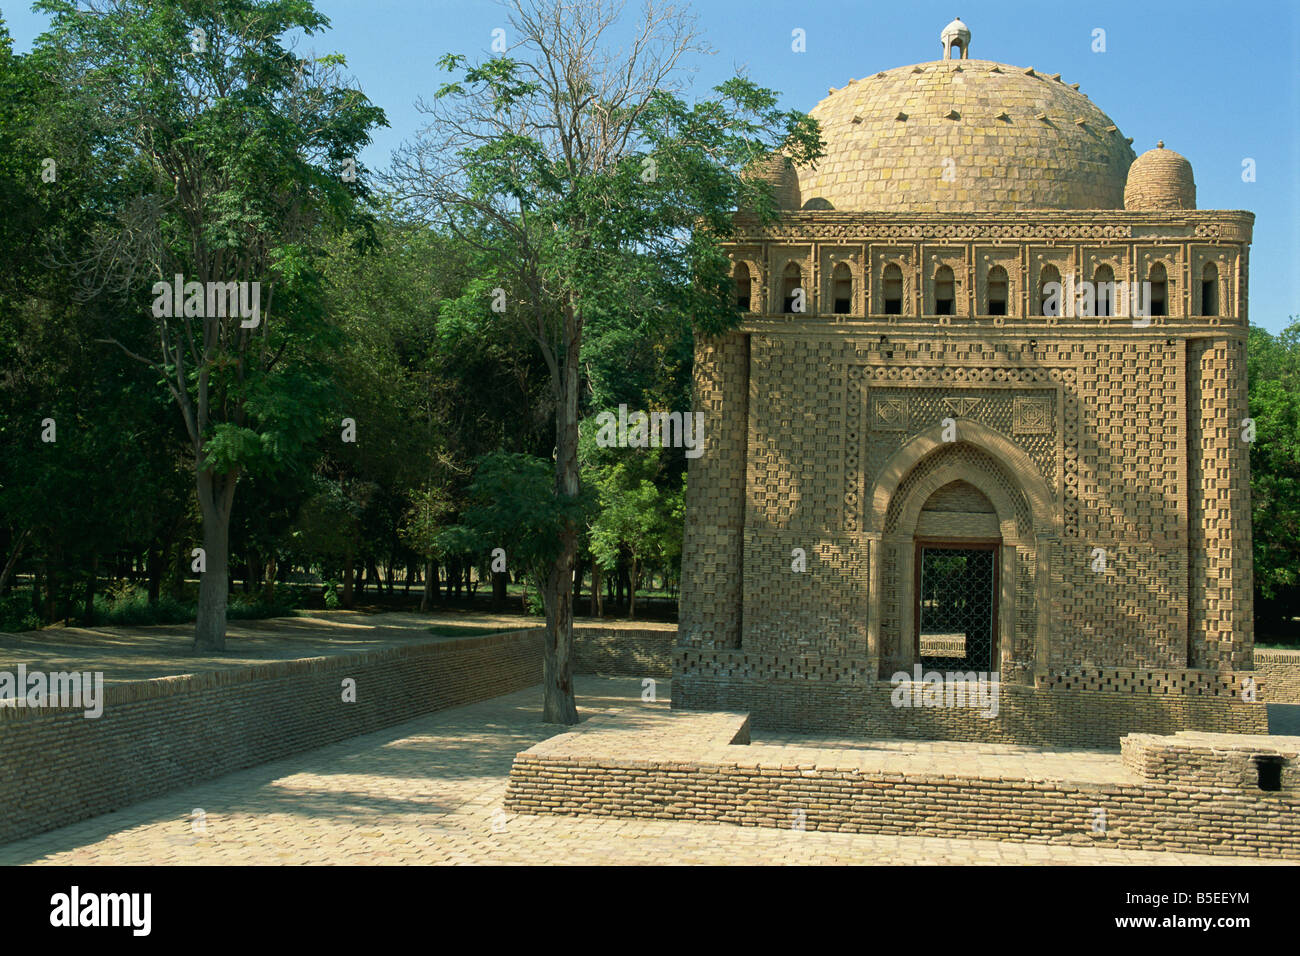 Ismail Samani mausoleum, built in 907 AD, Bukhara, Uzbekistan, Central Asia Stock Photo